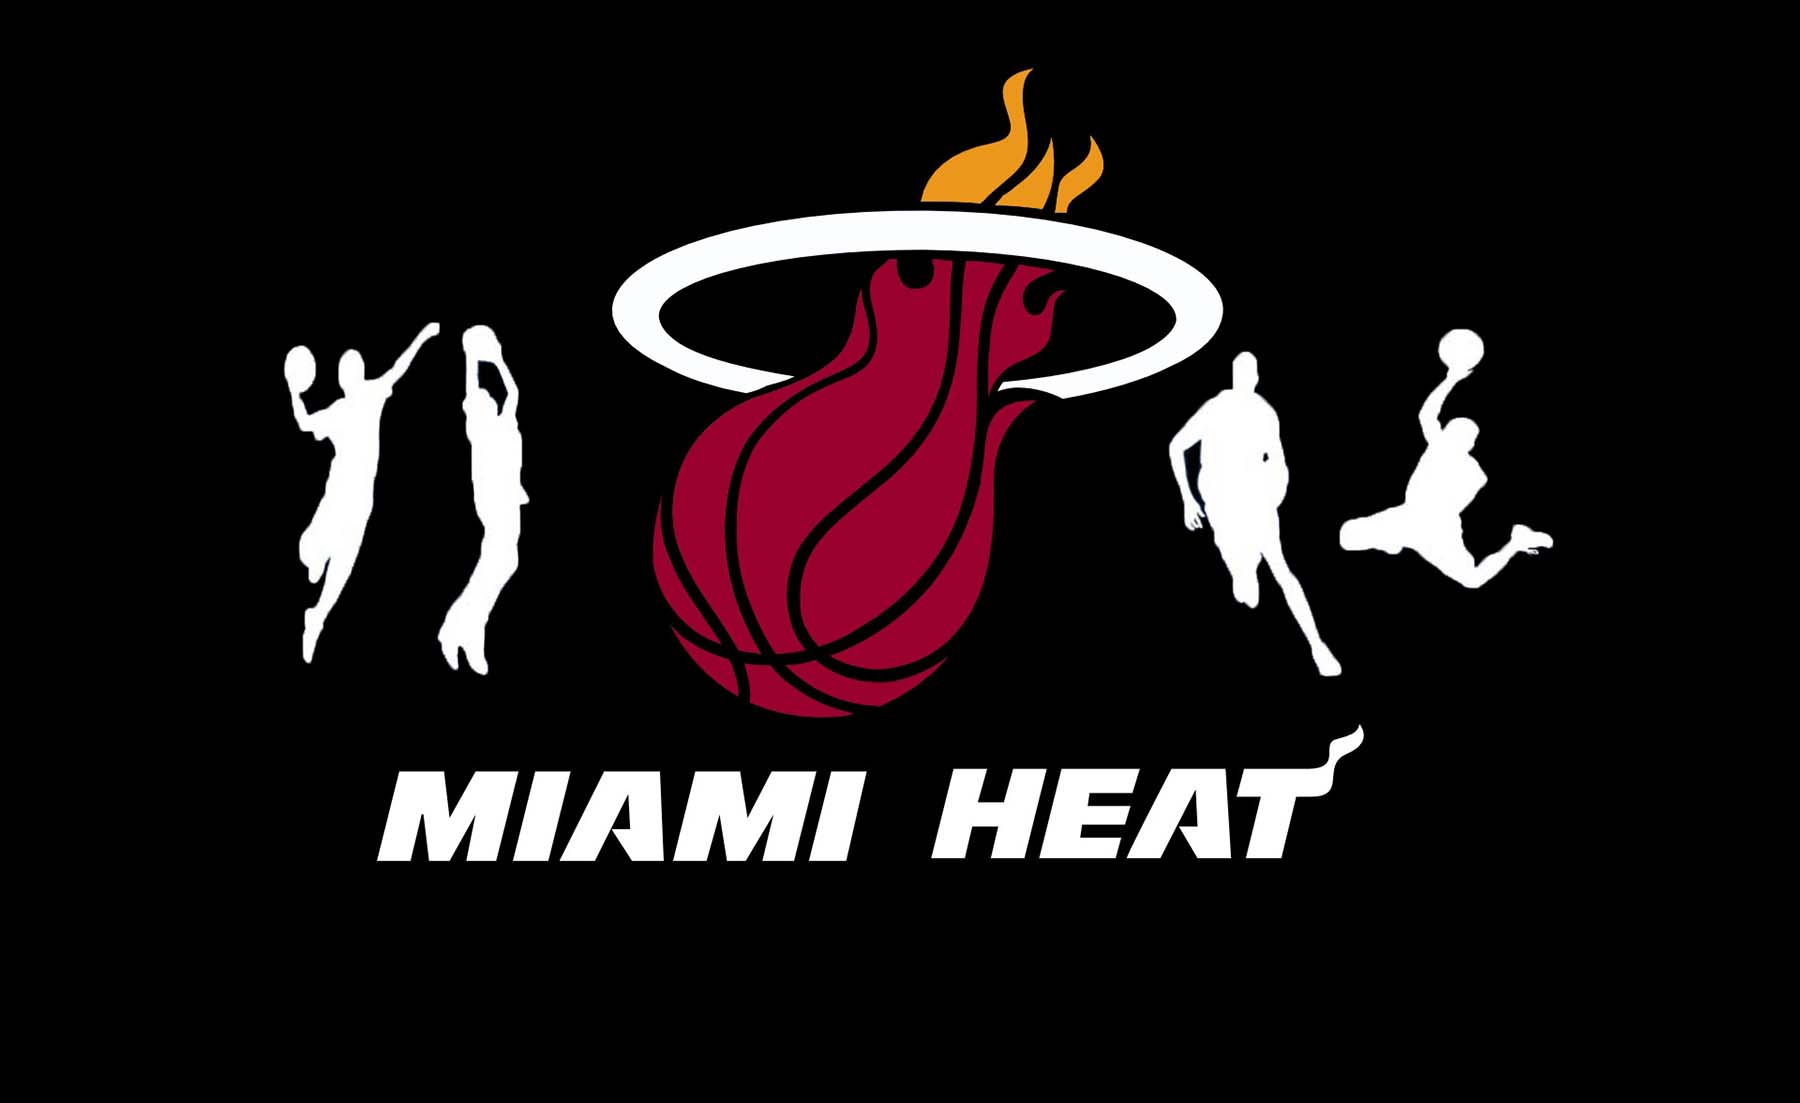 Miami Heat Image Nba Championship Games Wallpaper